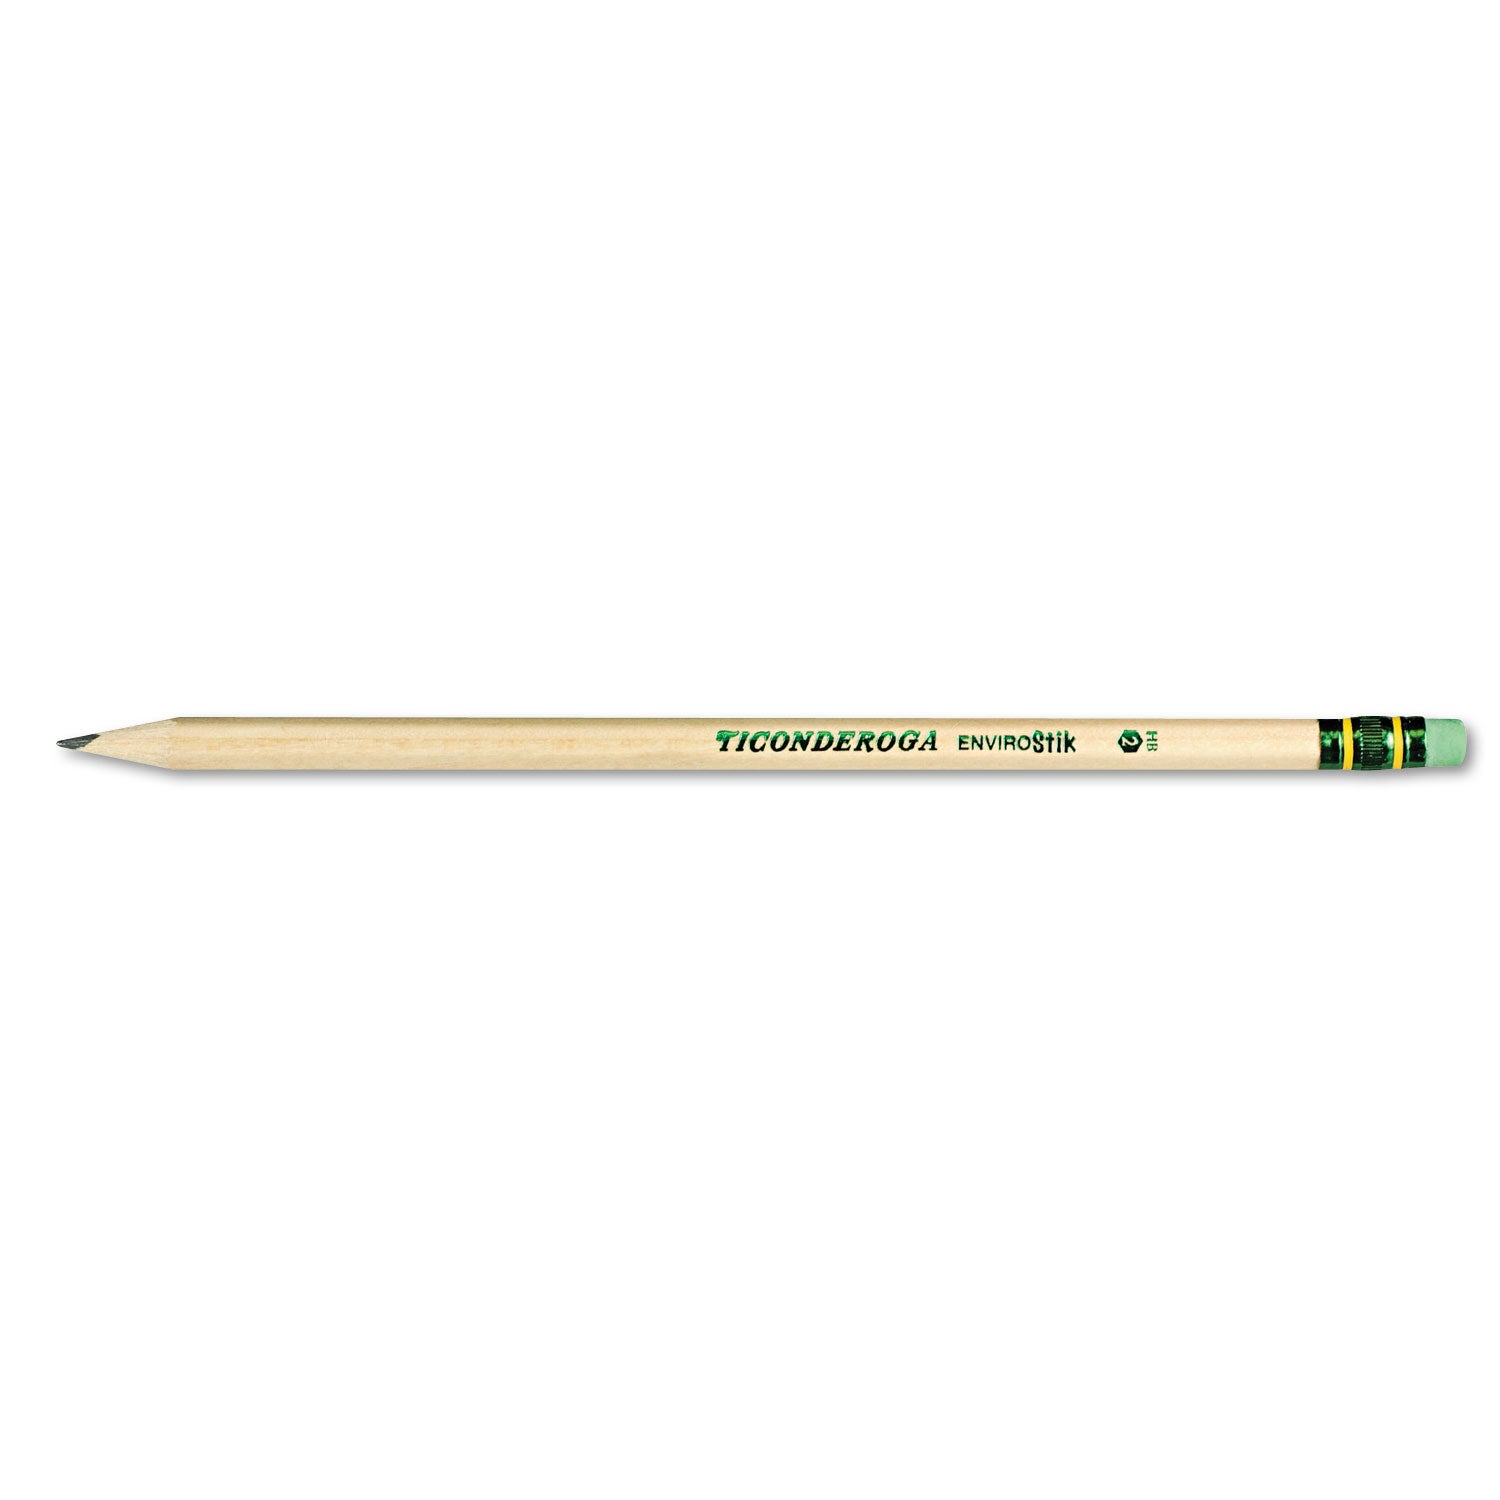 EnviroStiks Pencil, HB (#2), Black Lead, Natural Woodgrain Barrel, Dozen - 